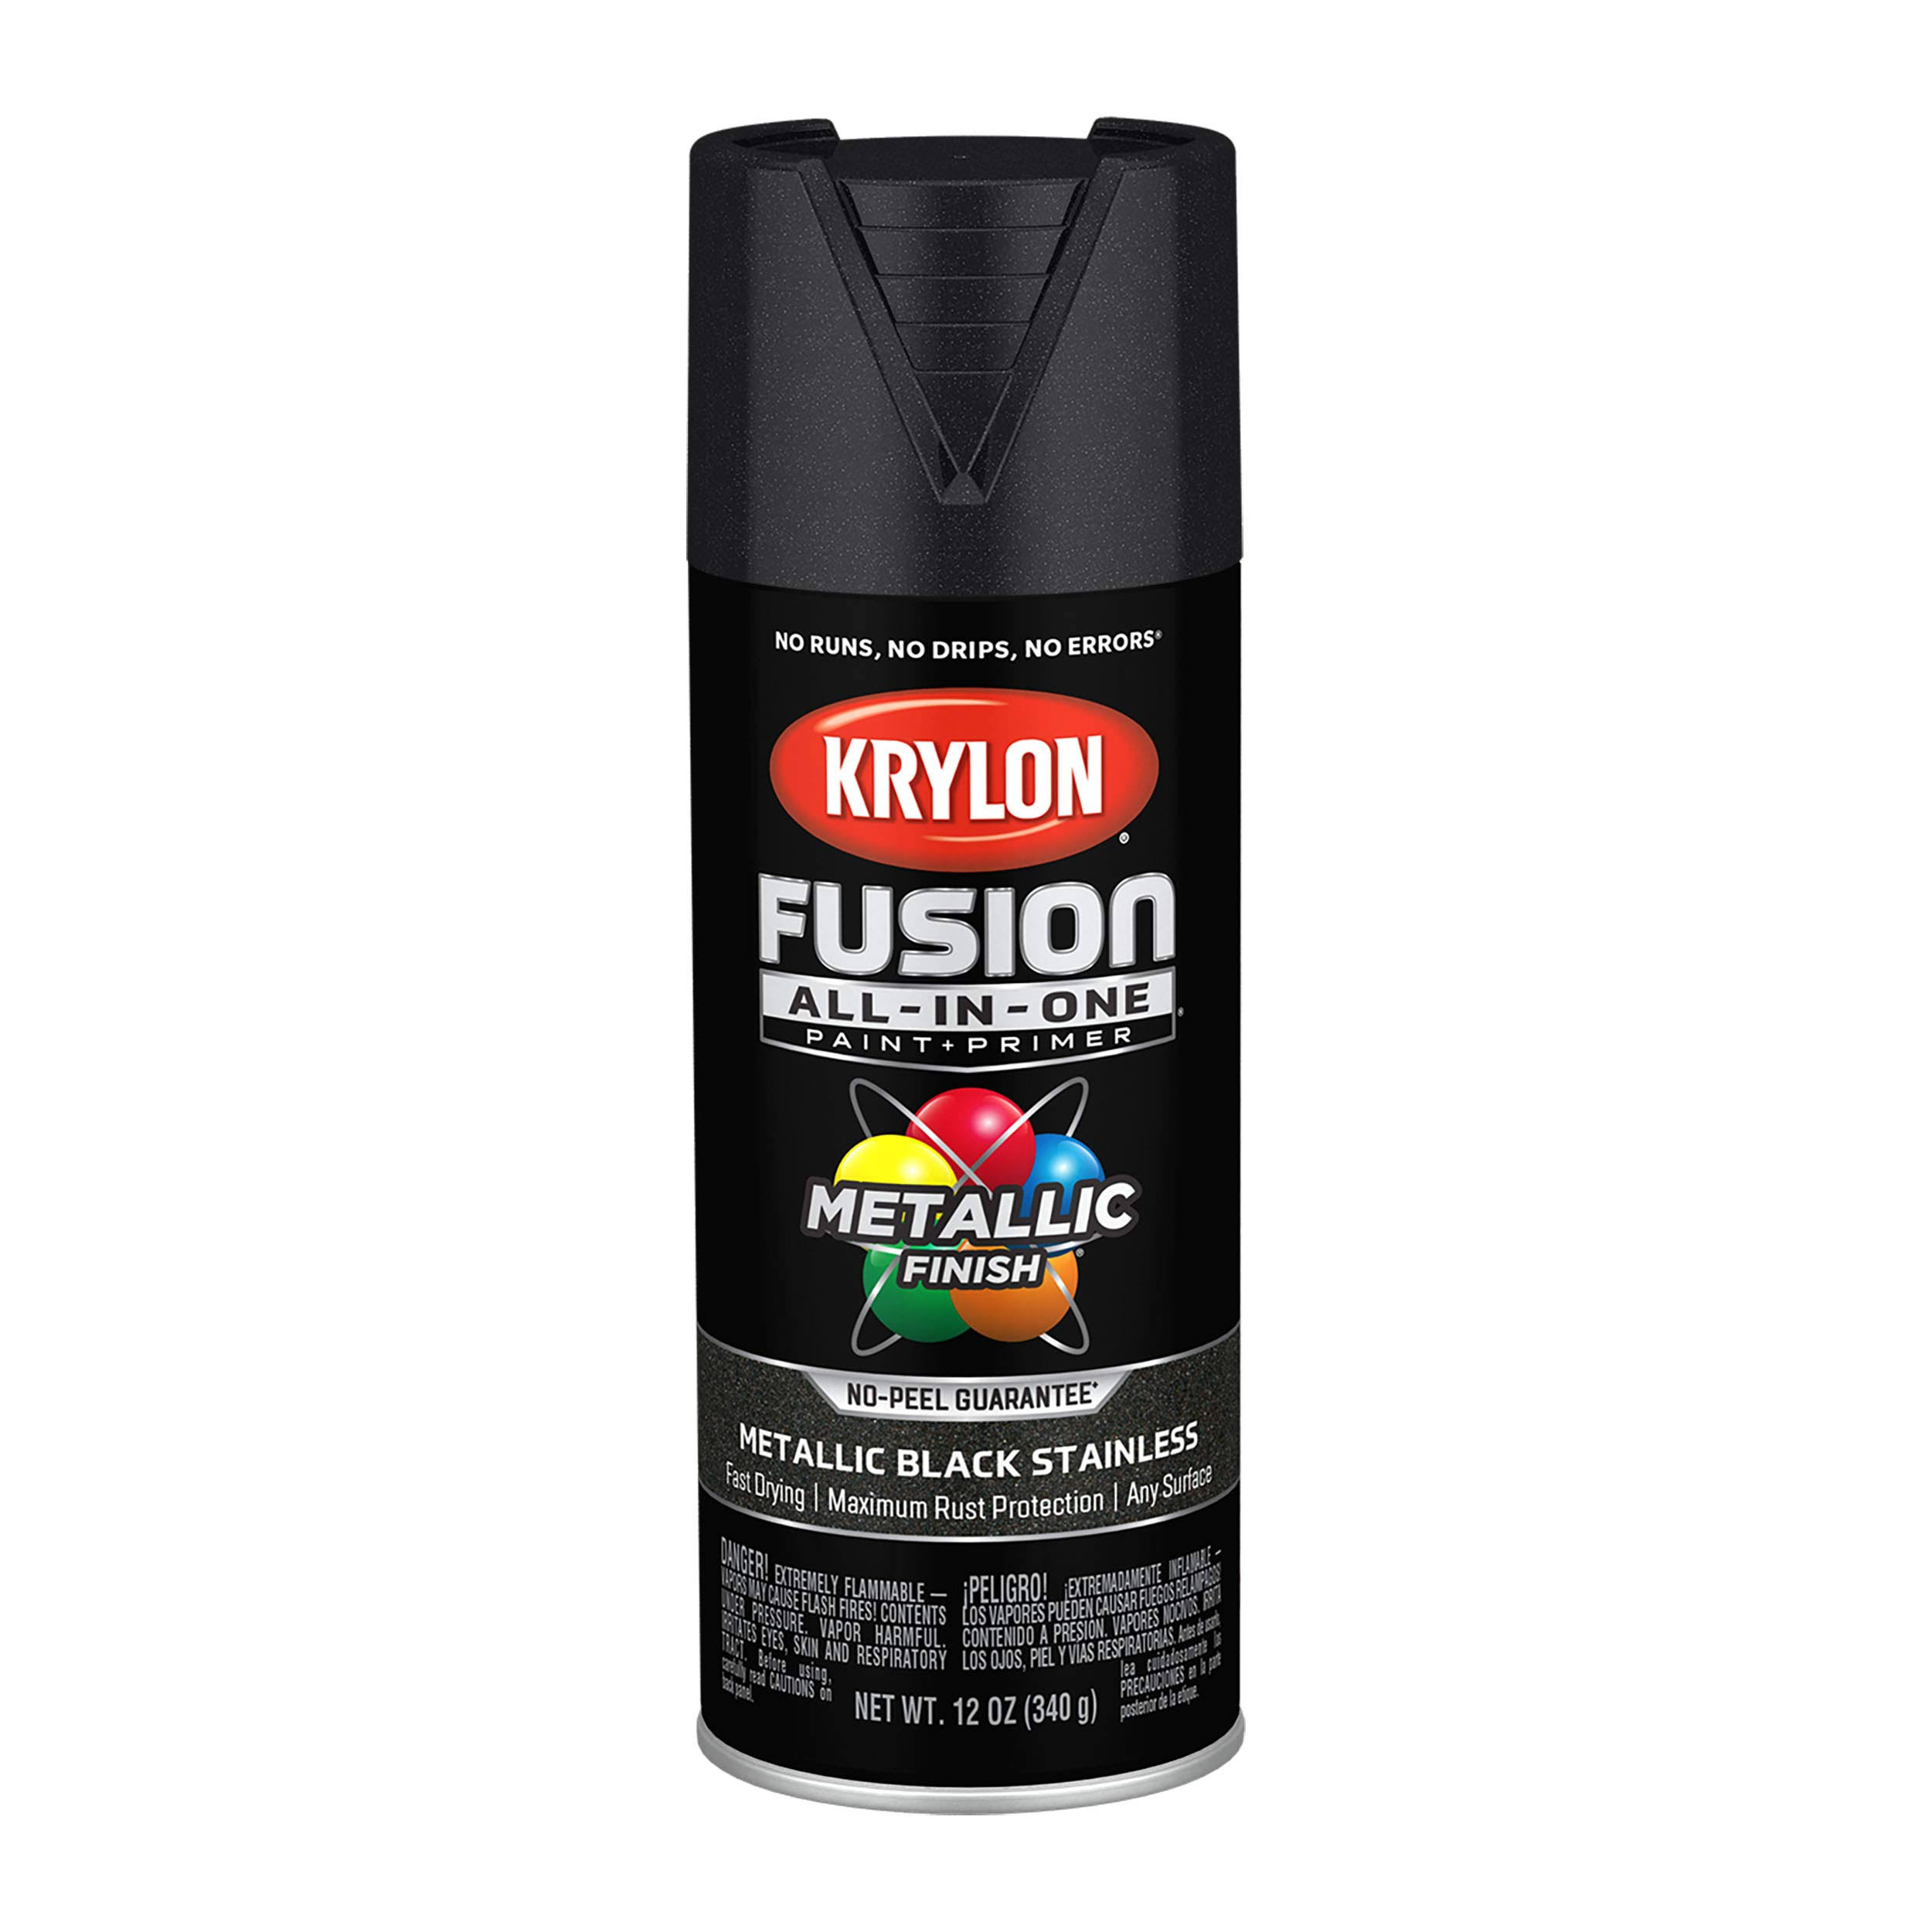 Krylon Fusion All in One Spray Paint - Metallic Black Stainless, 12oz